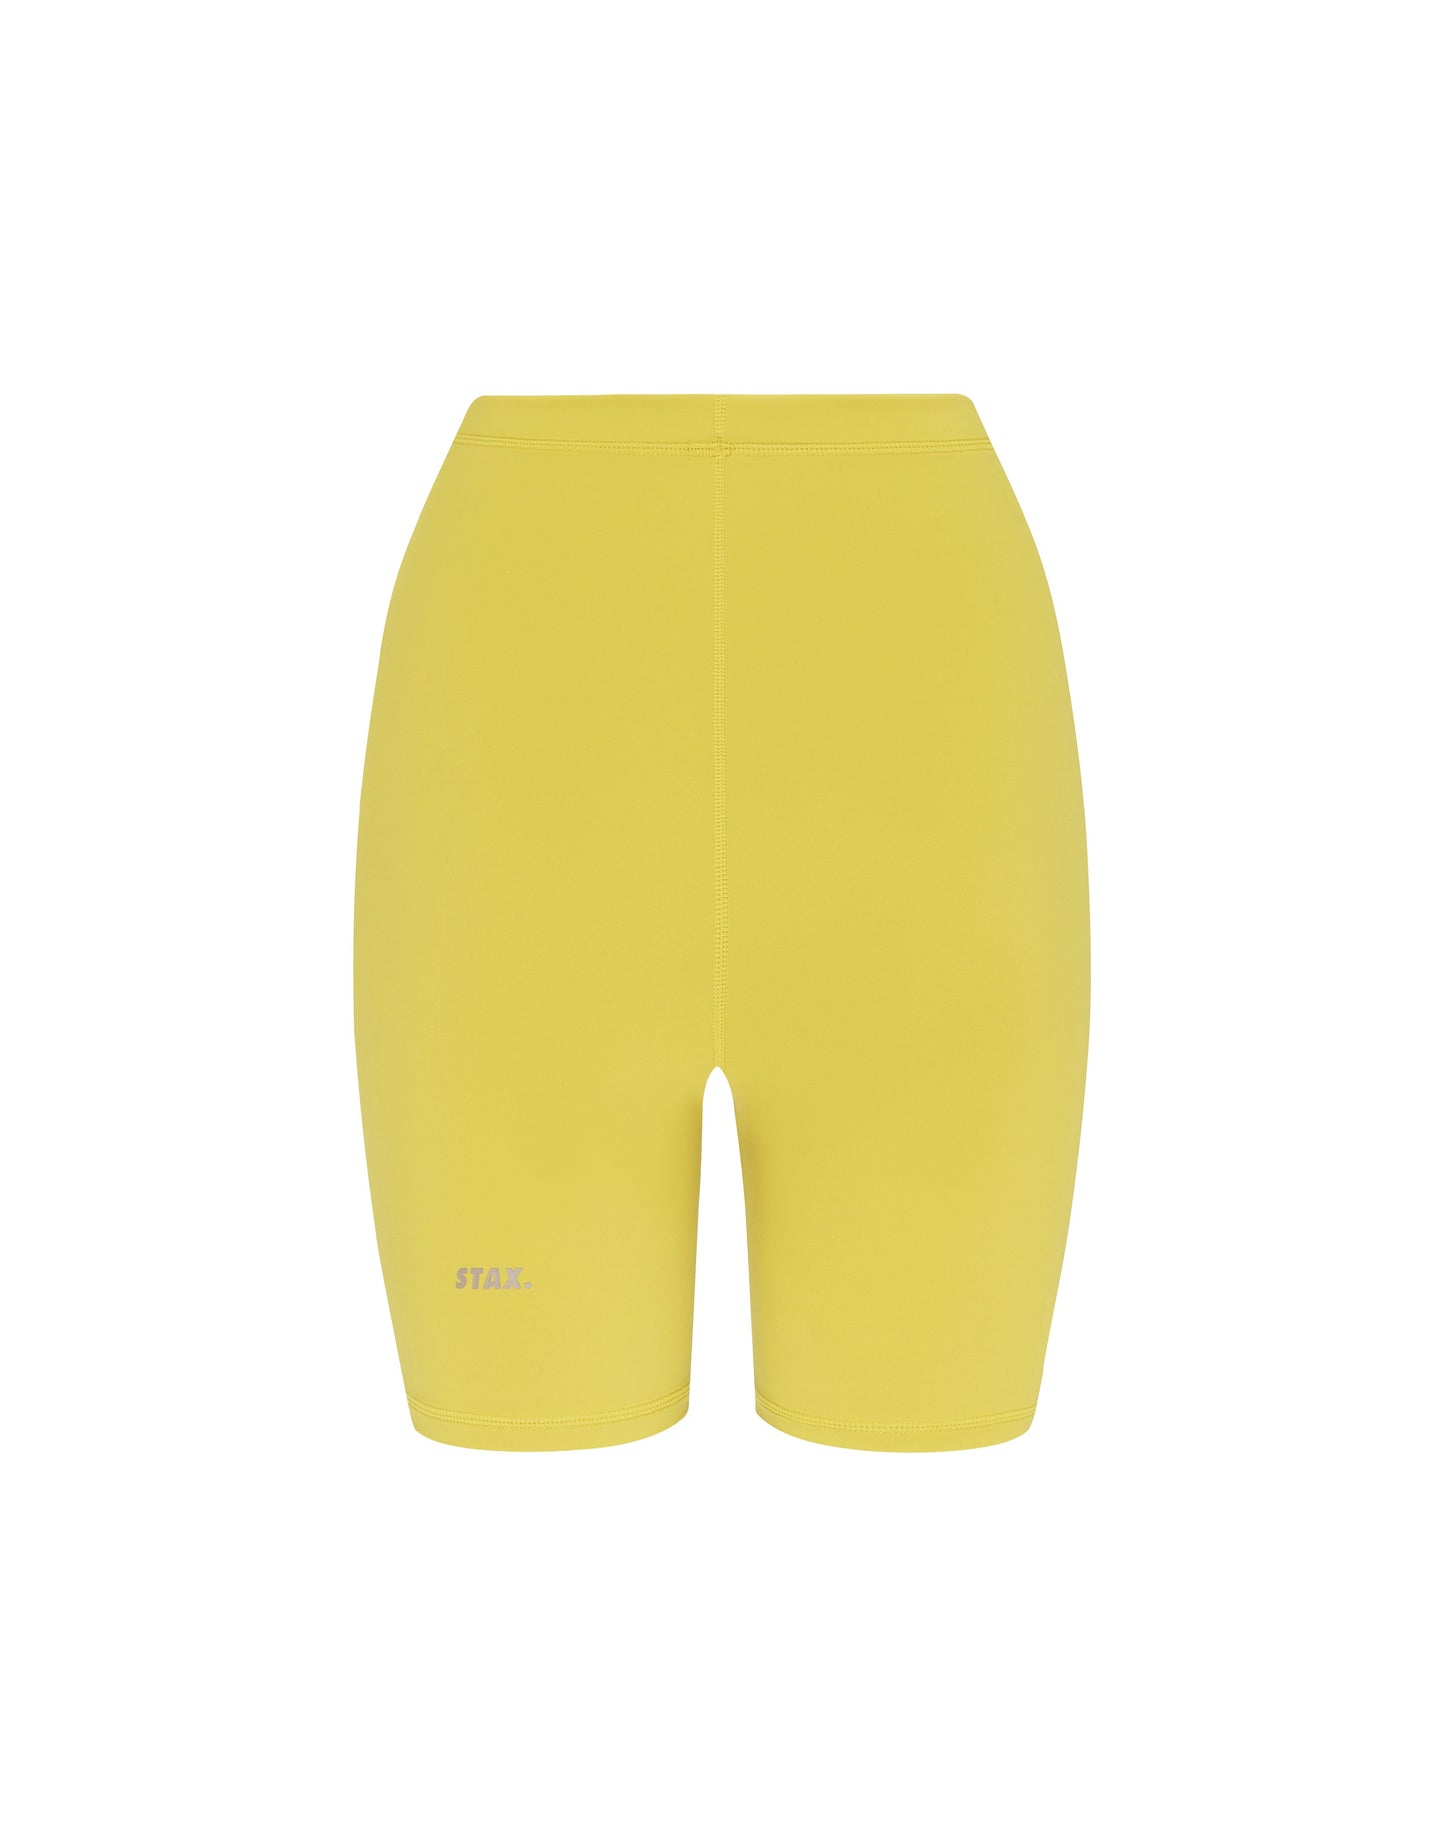 AW Bike Shorts - Mustard (Sadzi)